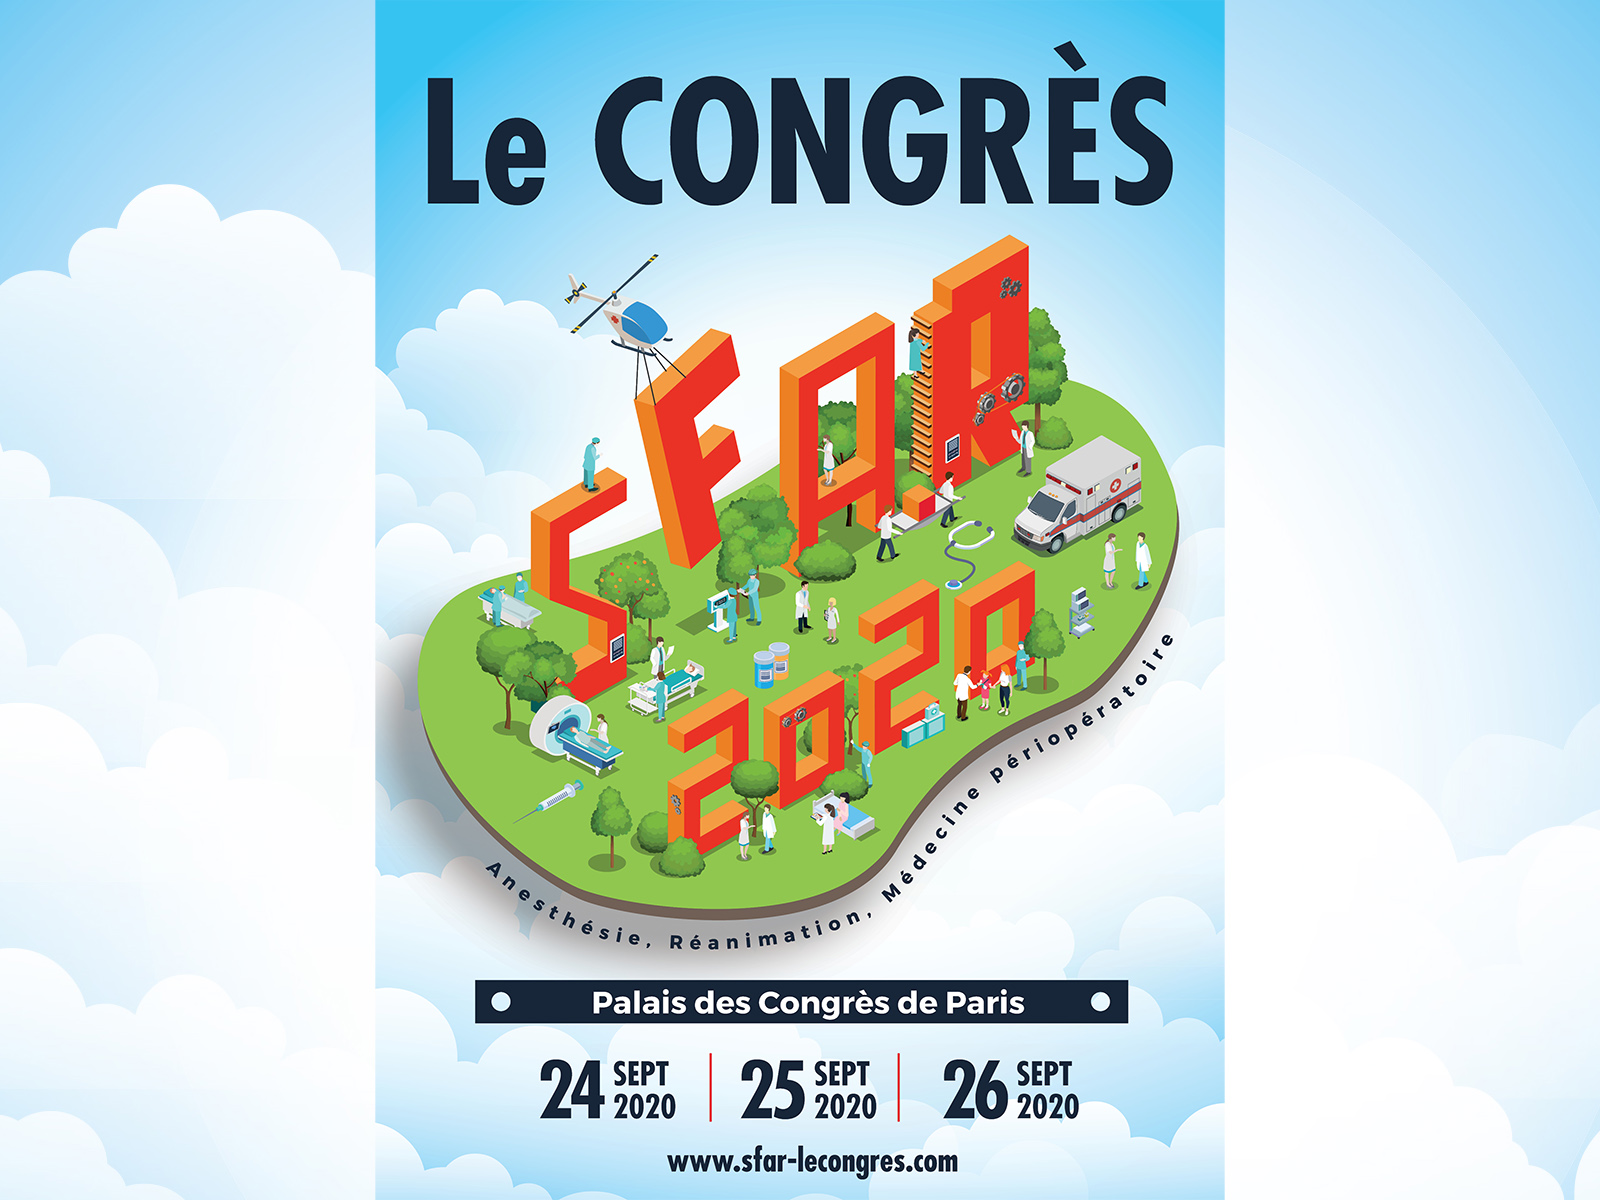 SFAR 2020 Le Congrès